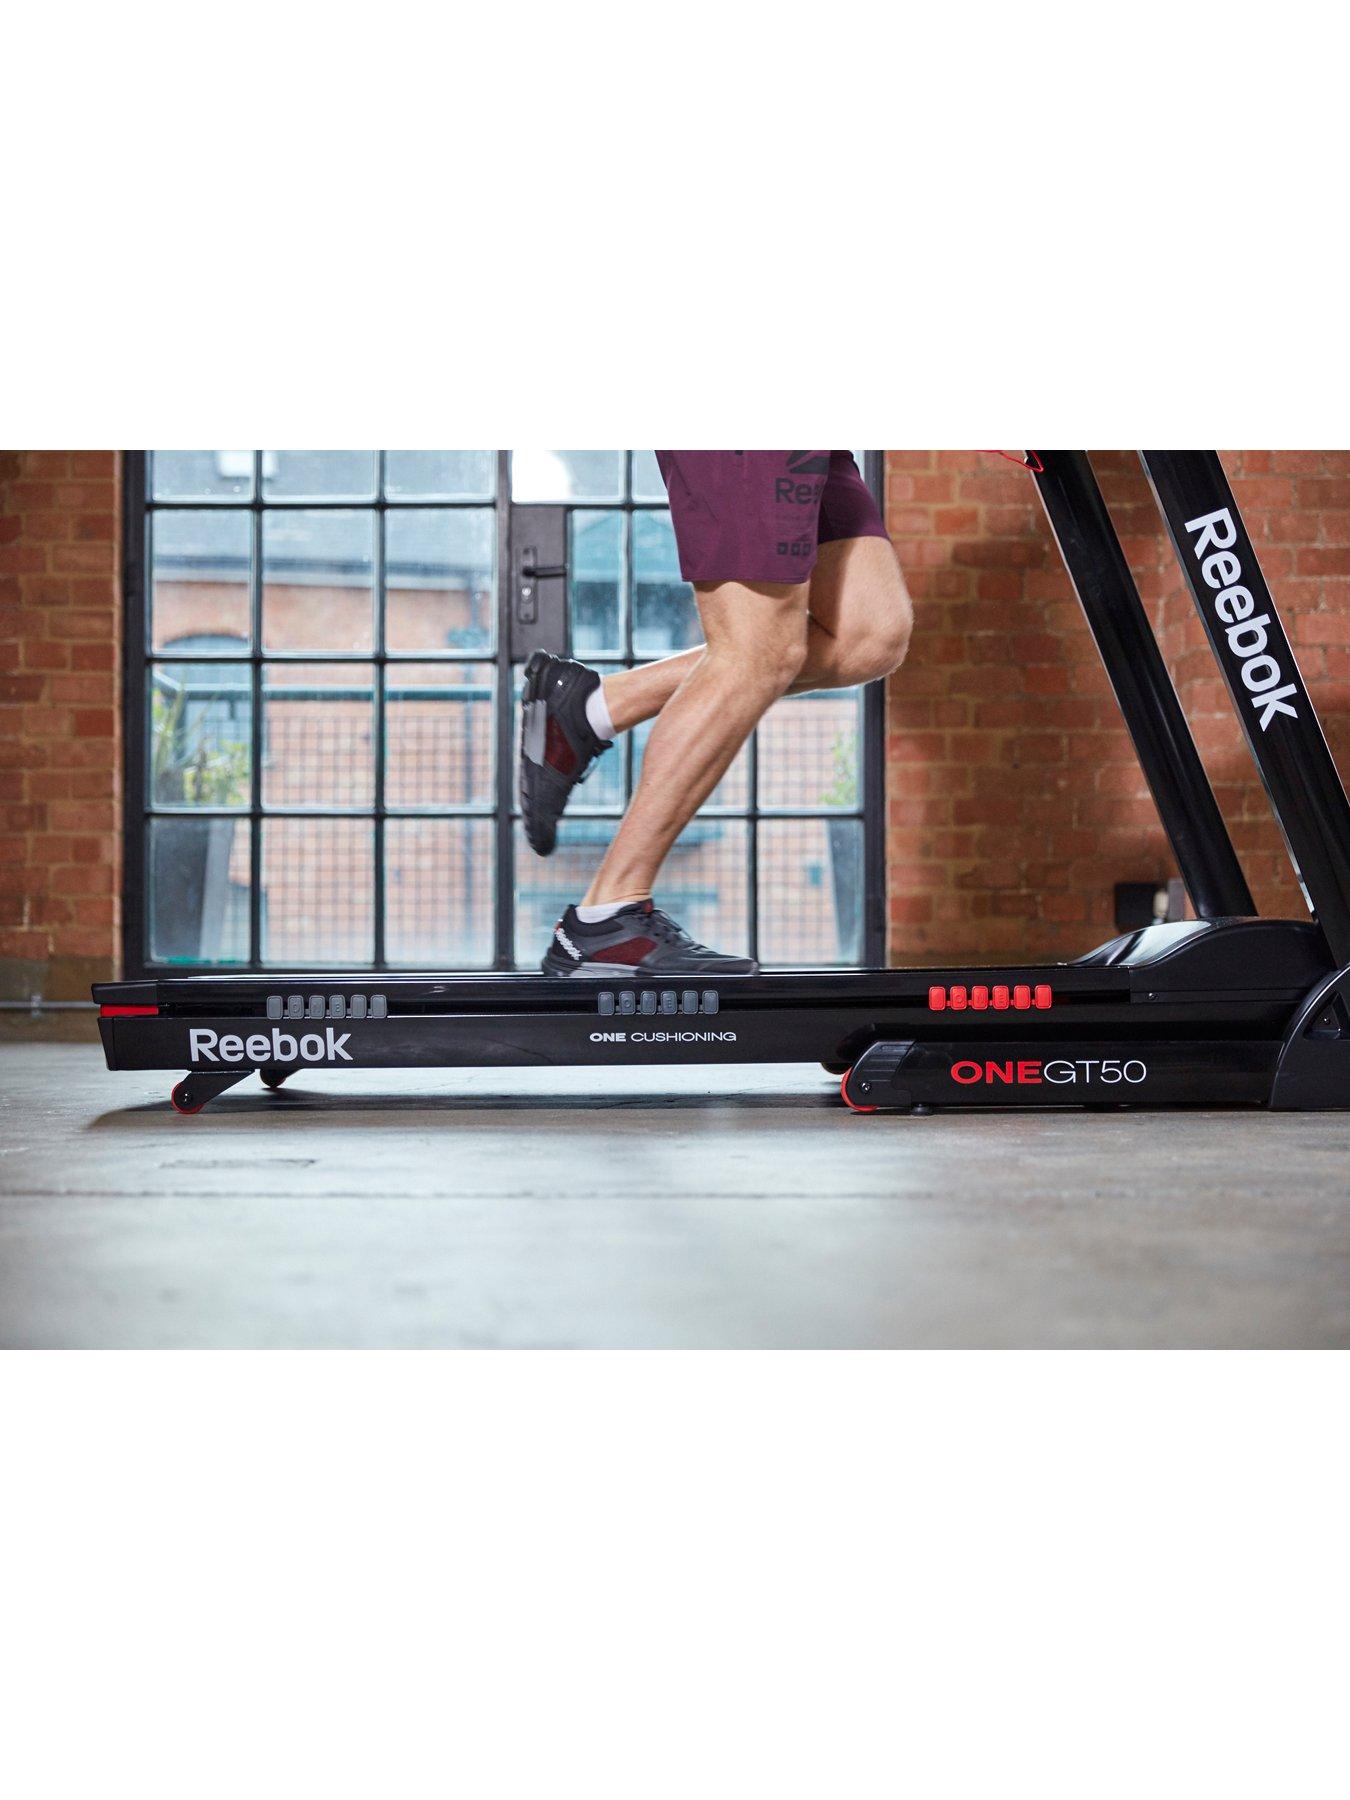 reebok gt50 treadmill price